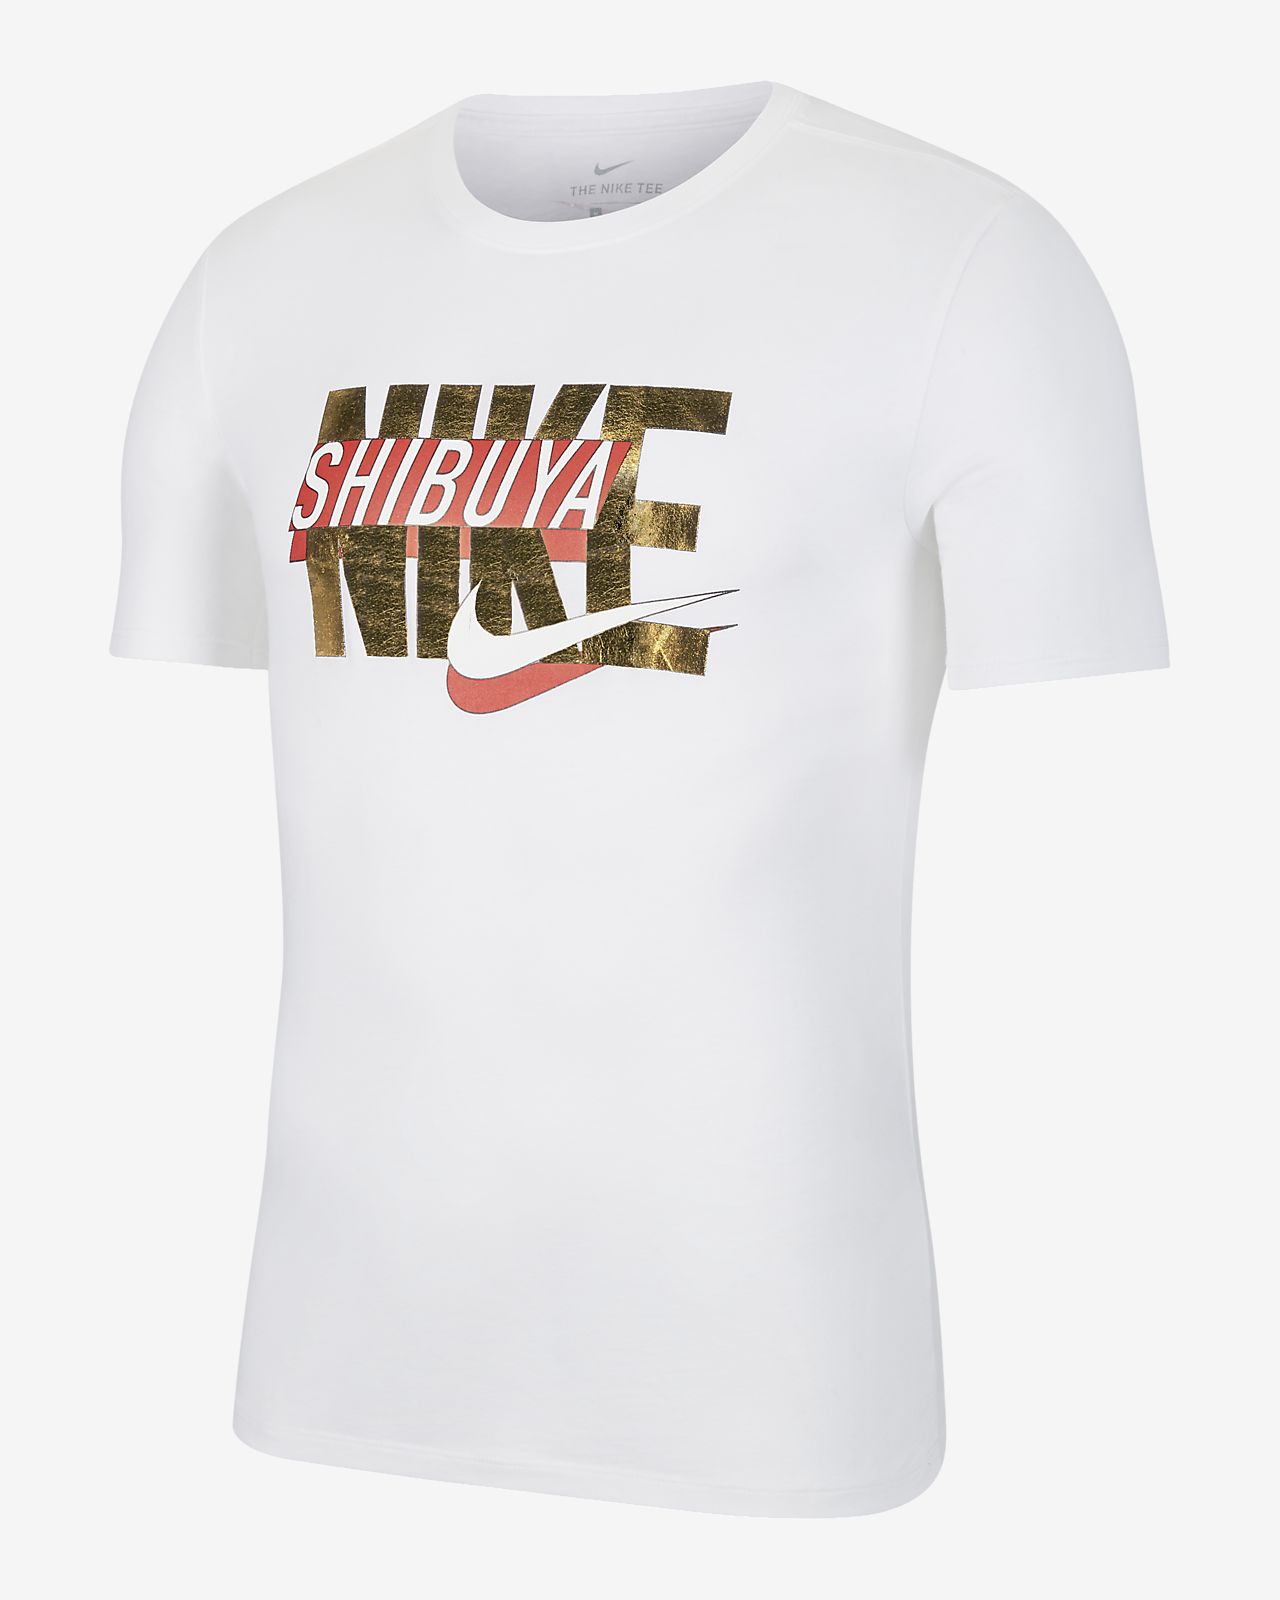 Nike公式 Nikeメンバー Nike By Shibuya Scramble 限定 ナイキ